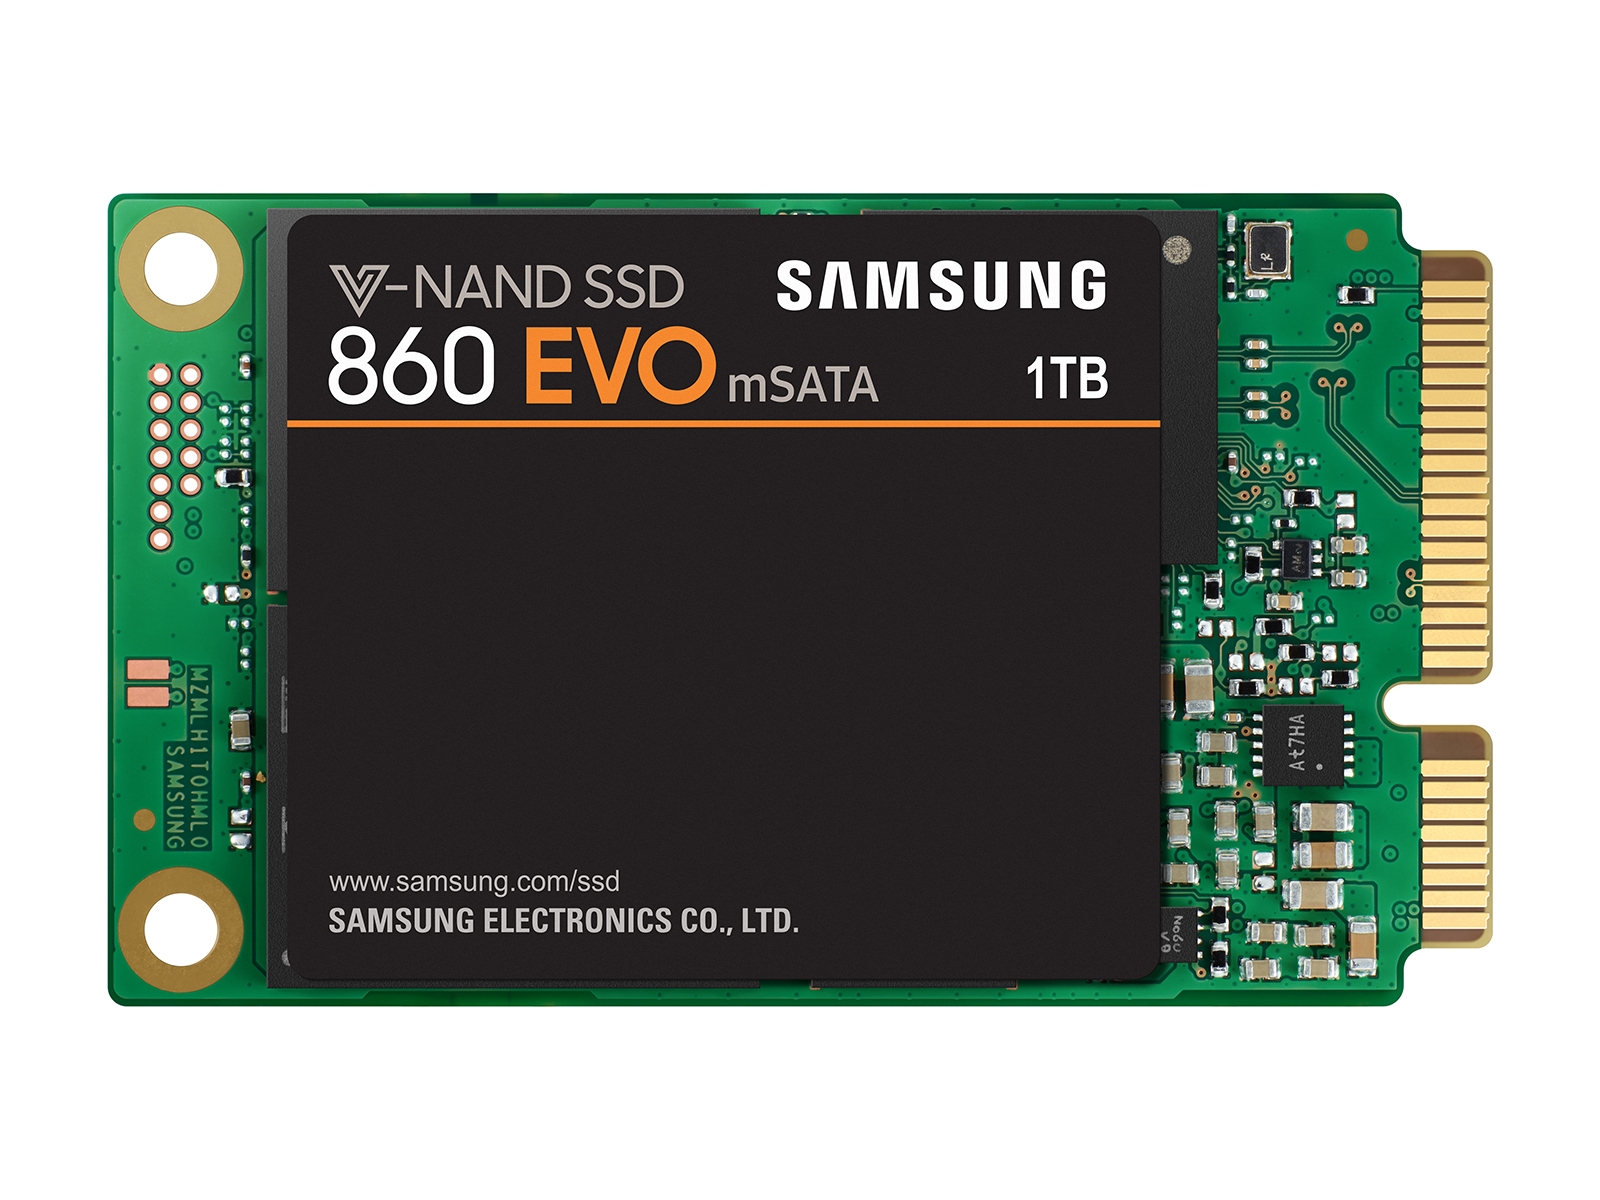 lektie Klage udelukkende SSD 860 EVO mSATA 1TB Memory & Storage - MZ-M6E1T0BW | Samsung US